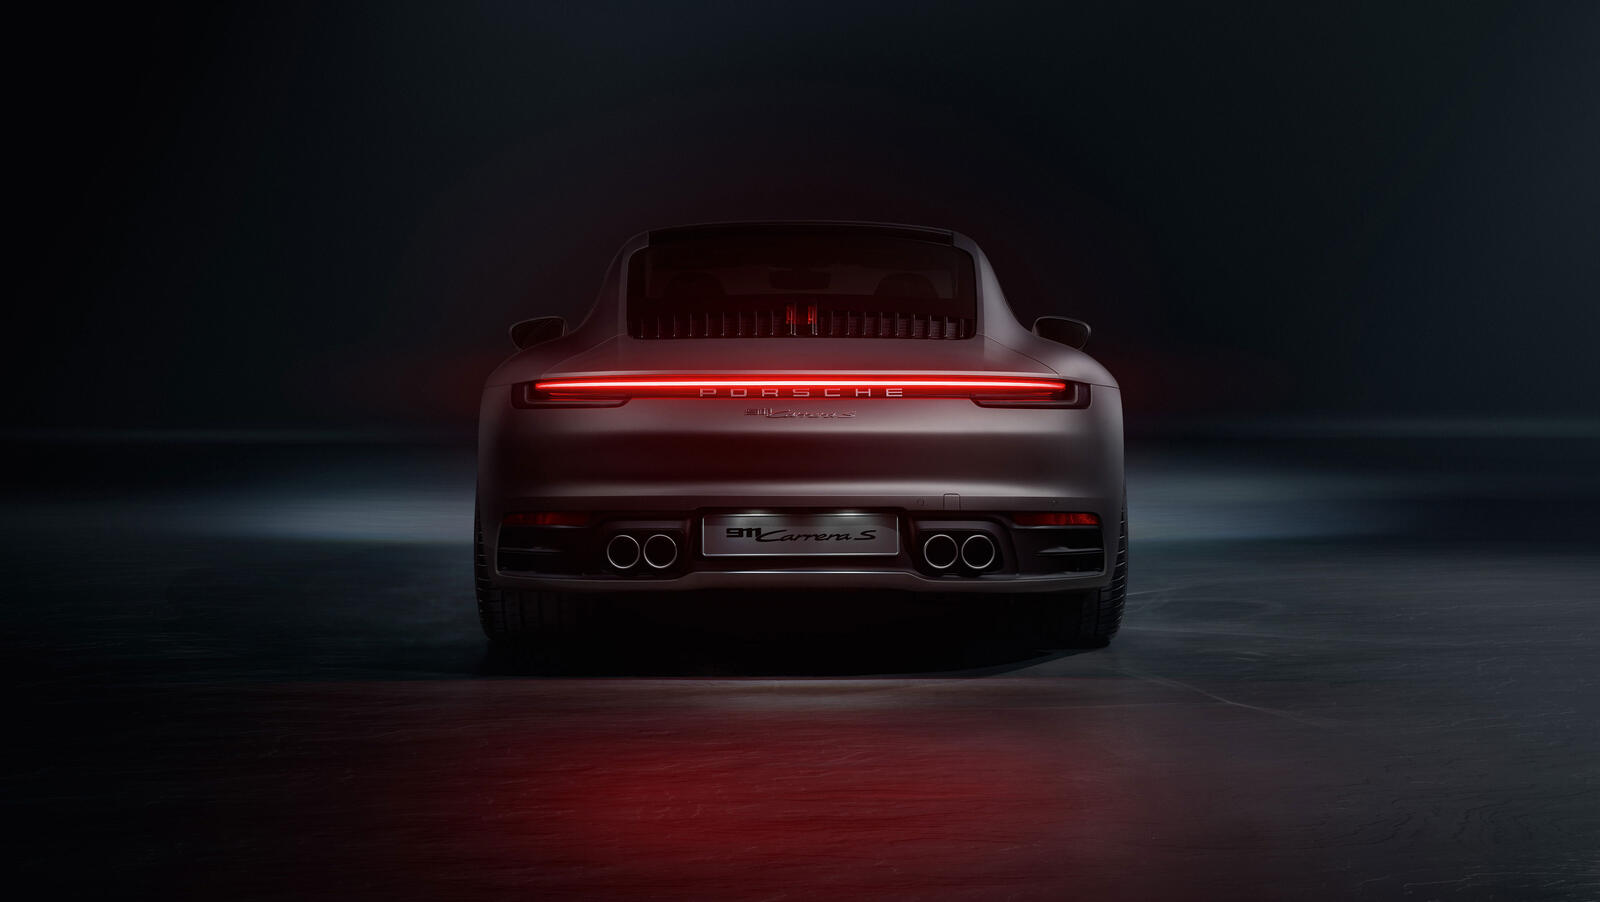 Wallpapers rear end Porsche 911 2019 cars on the desktop